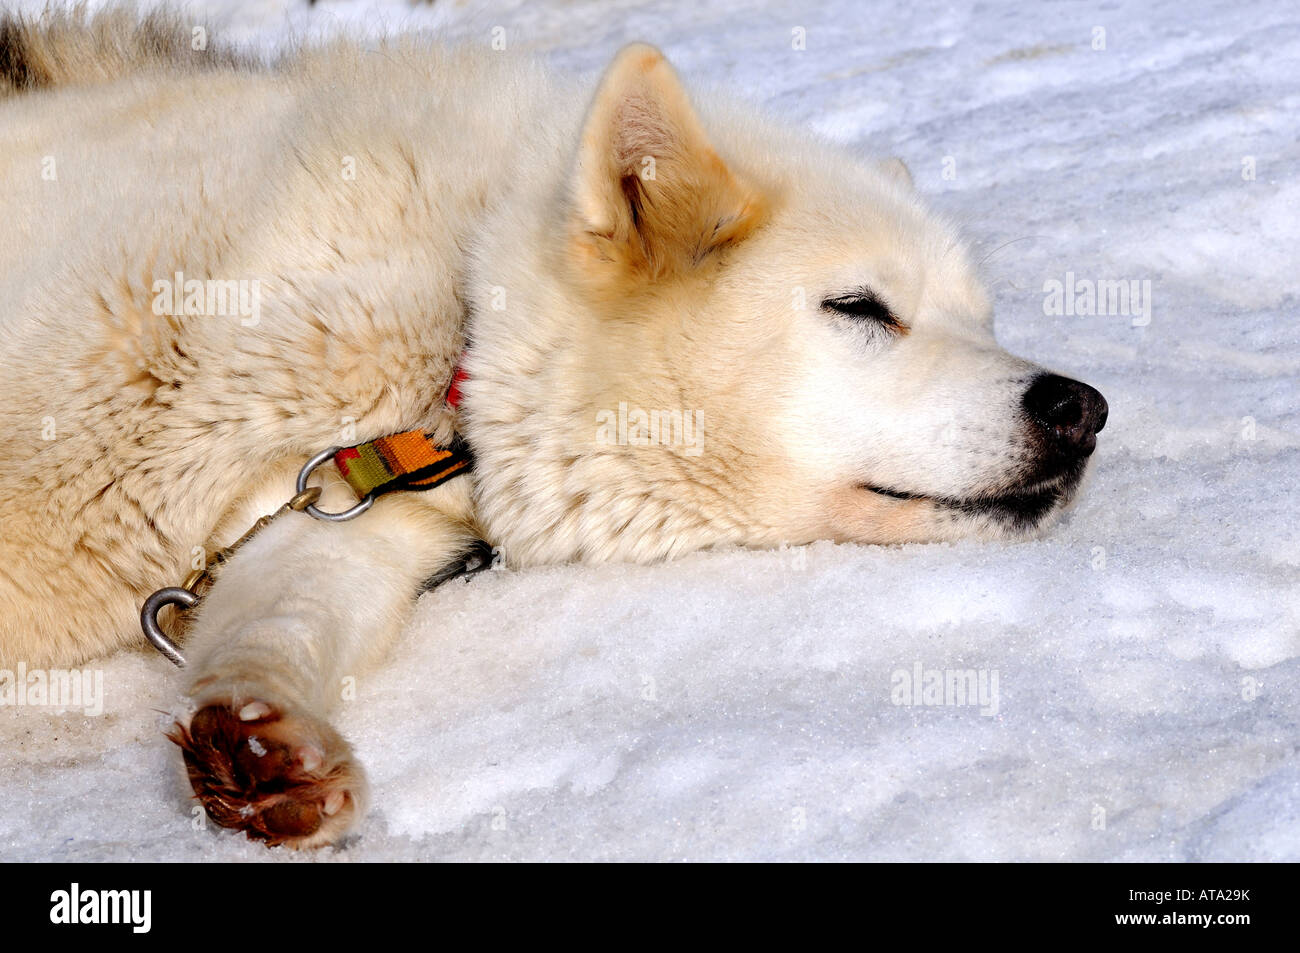 Greenland Dog sleeps on snow Stock Photo